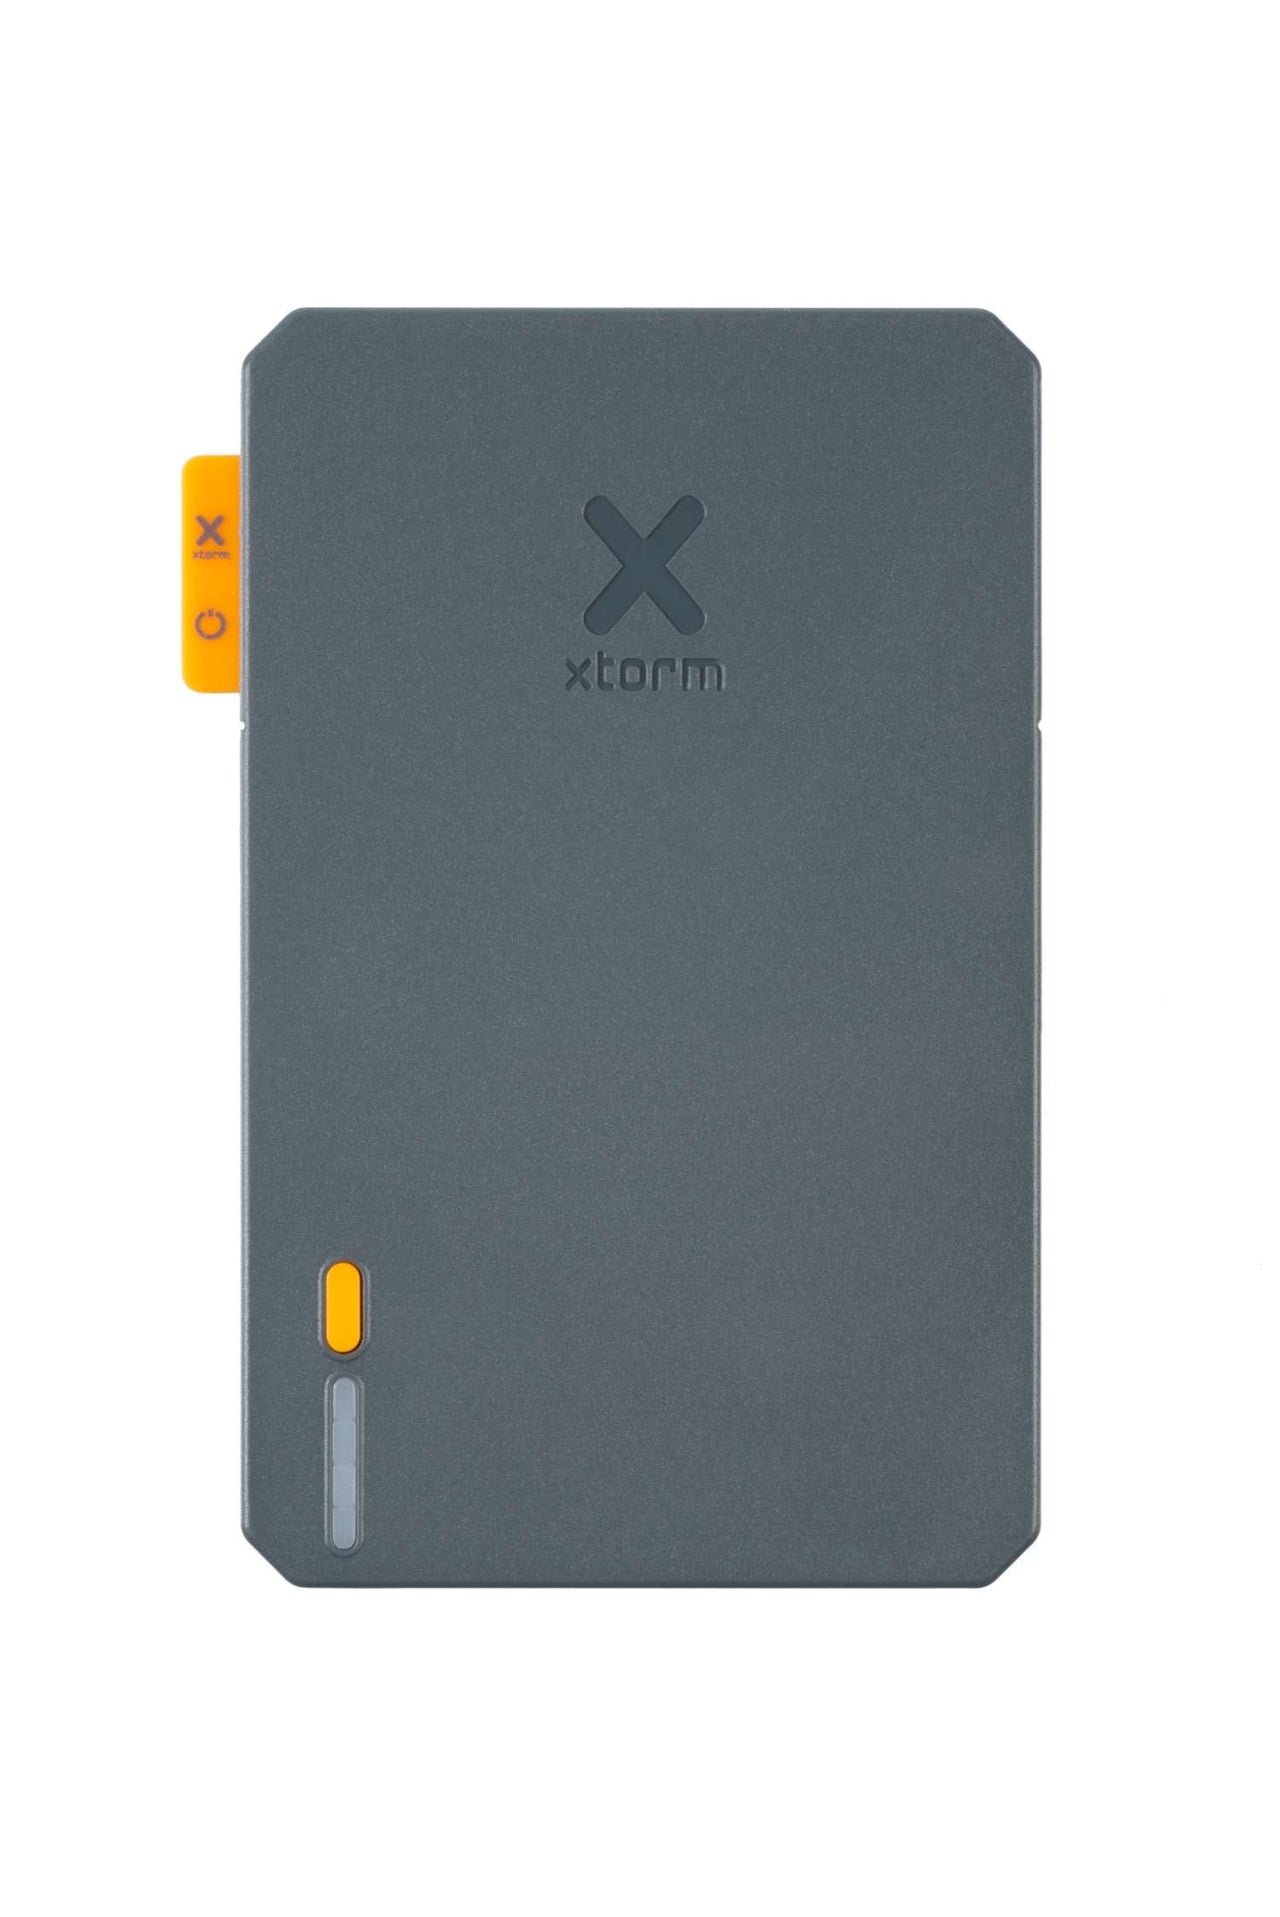 Xtorm Essential Powerbank 10.000 mAh